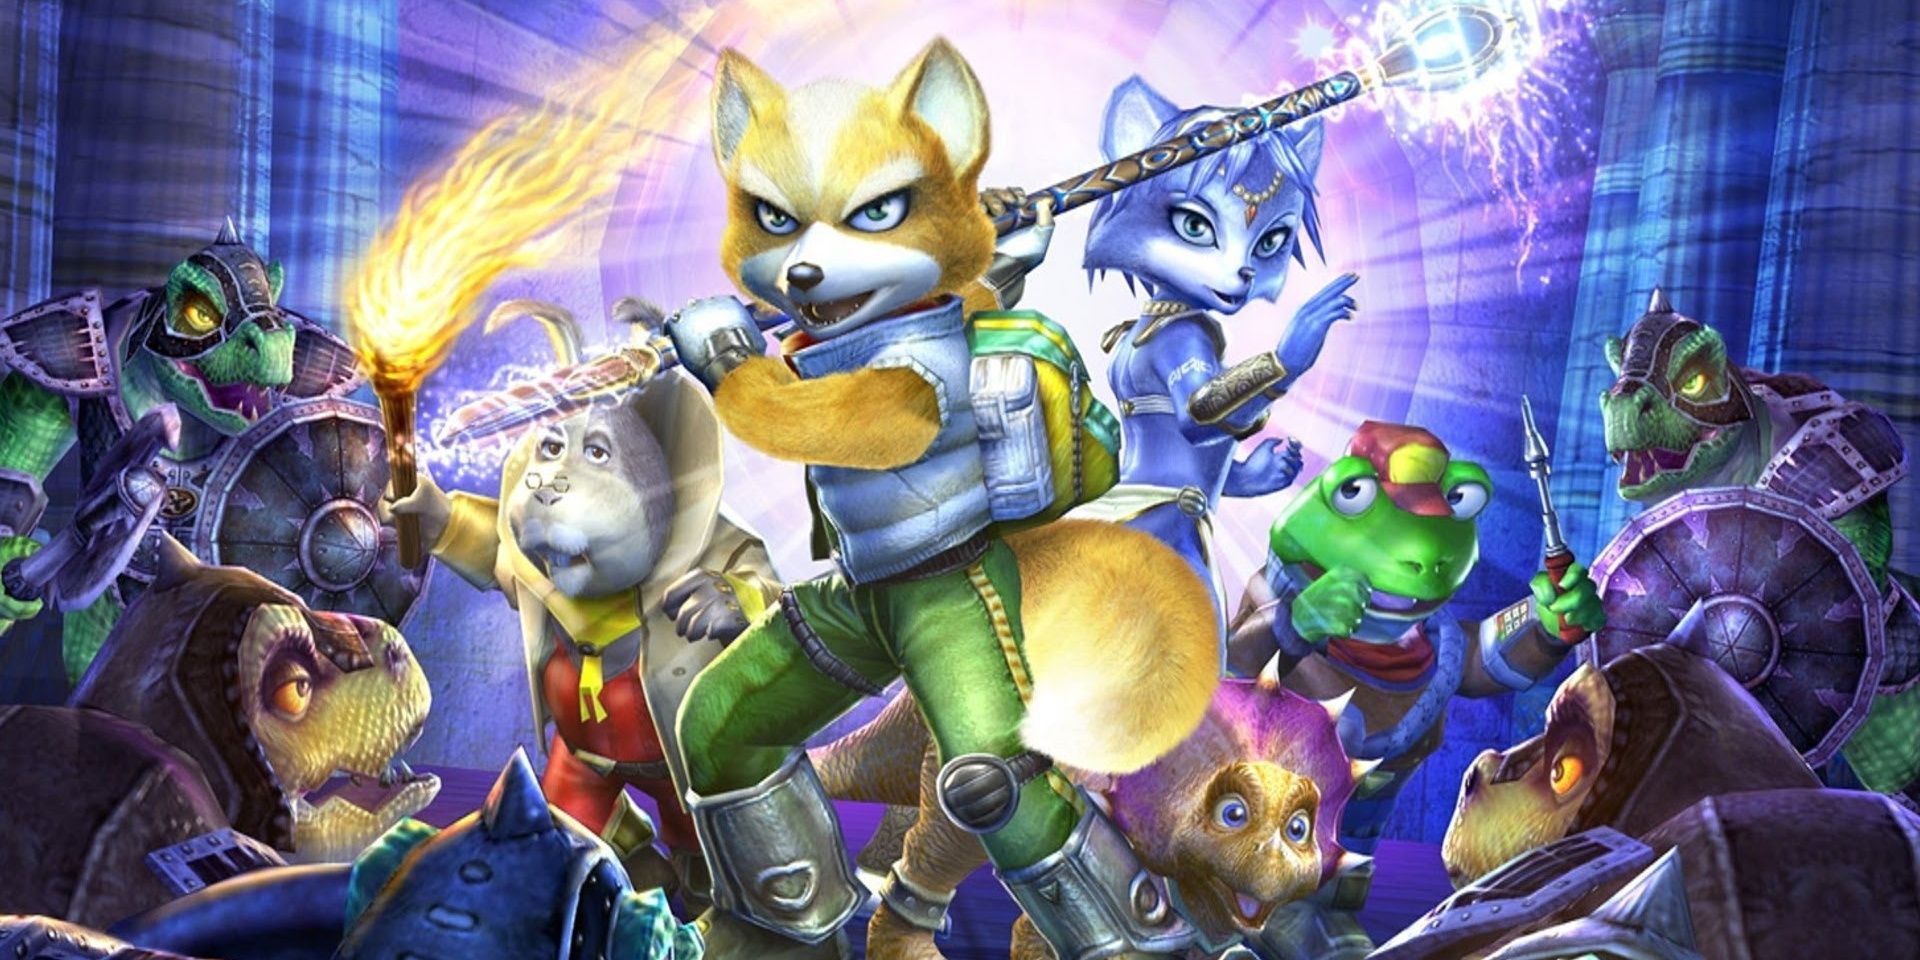 The cast of Star Fox: Adventures posing